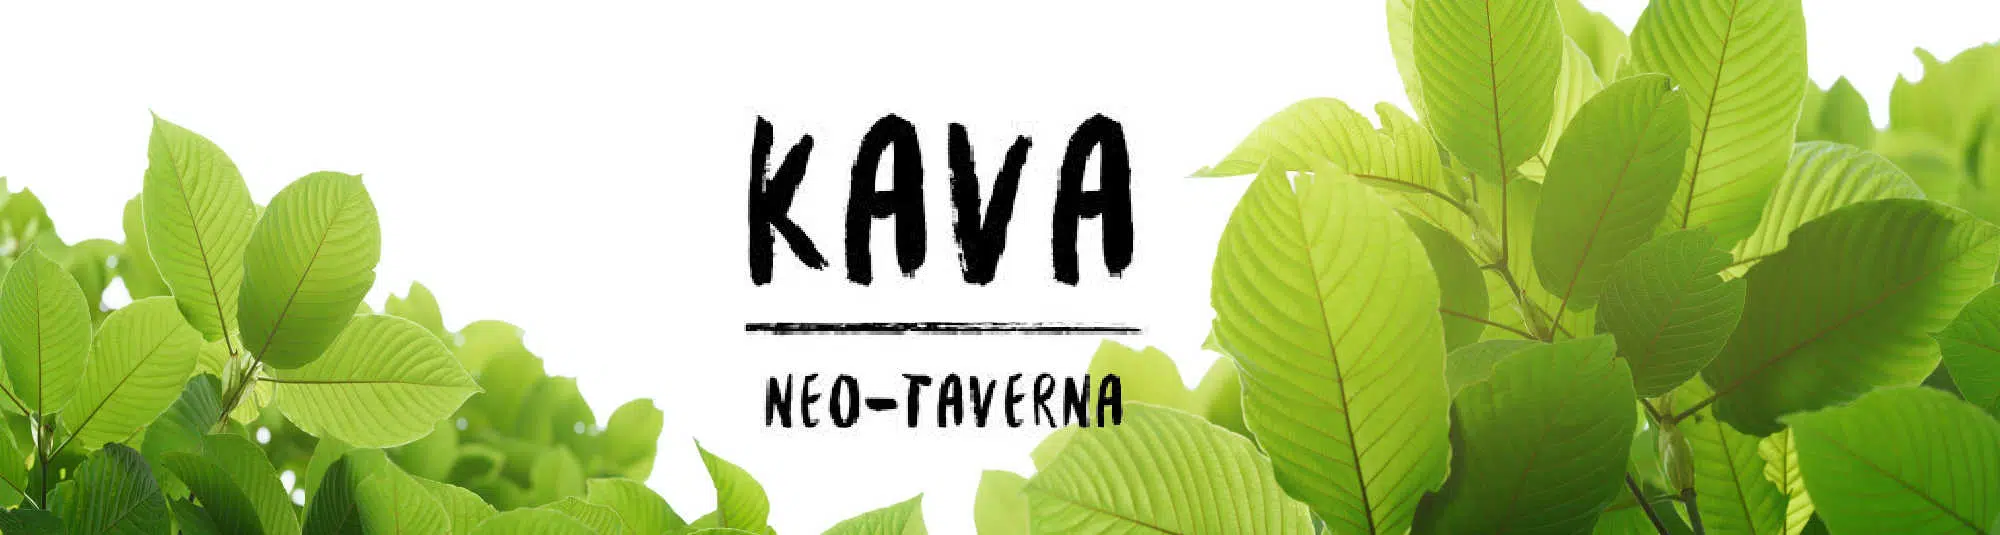 image of kava neo taverna